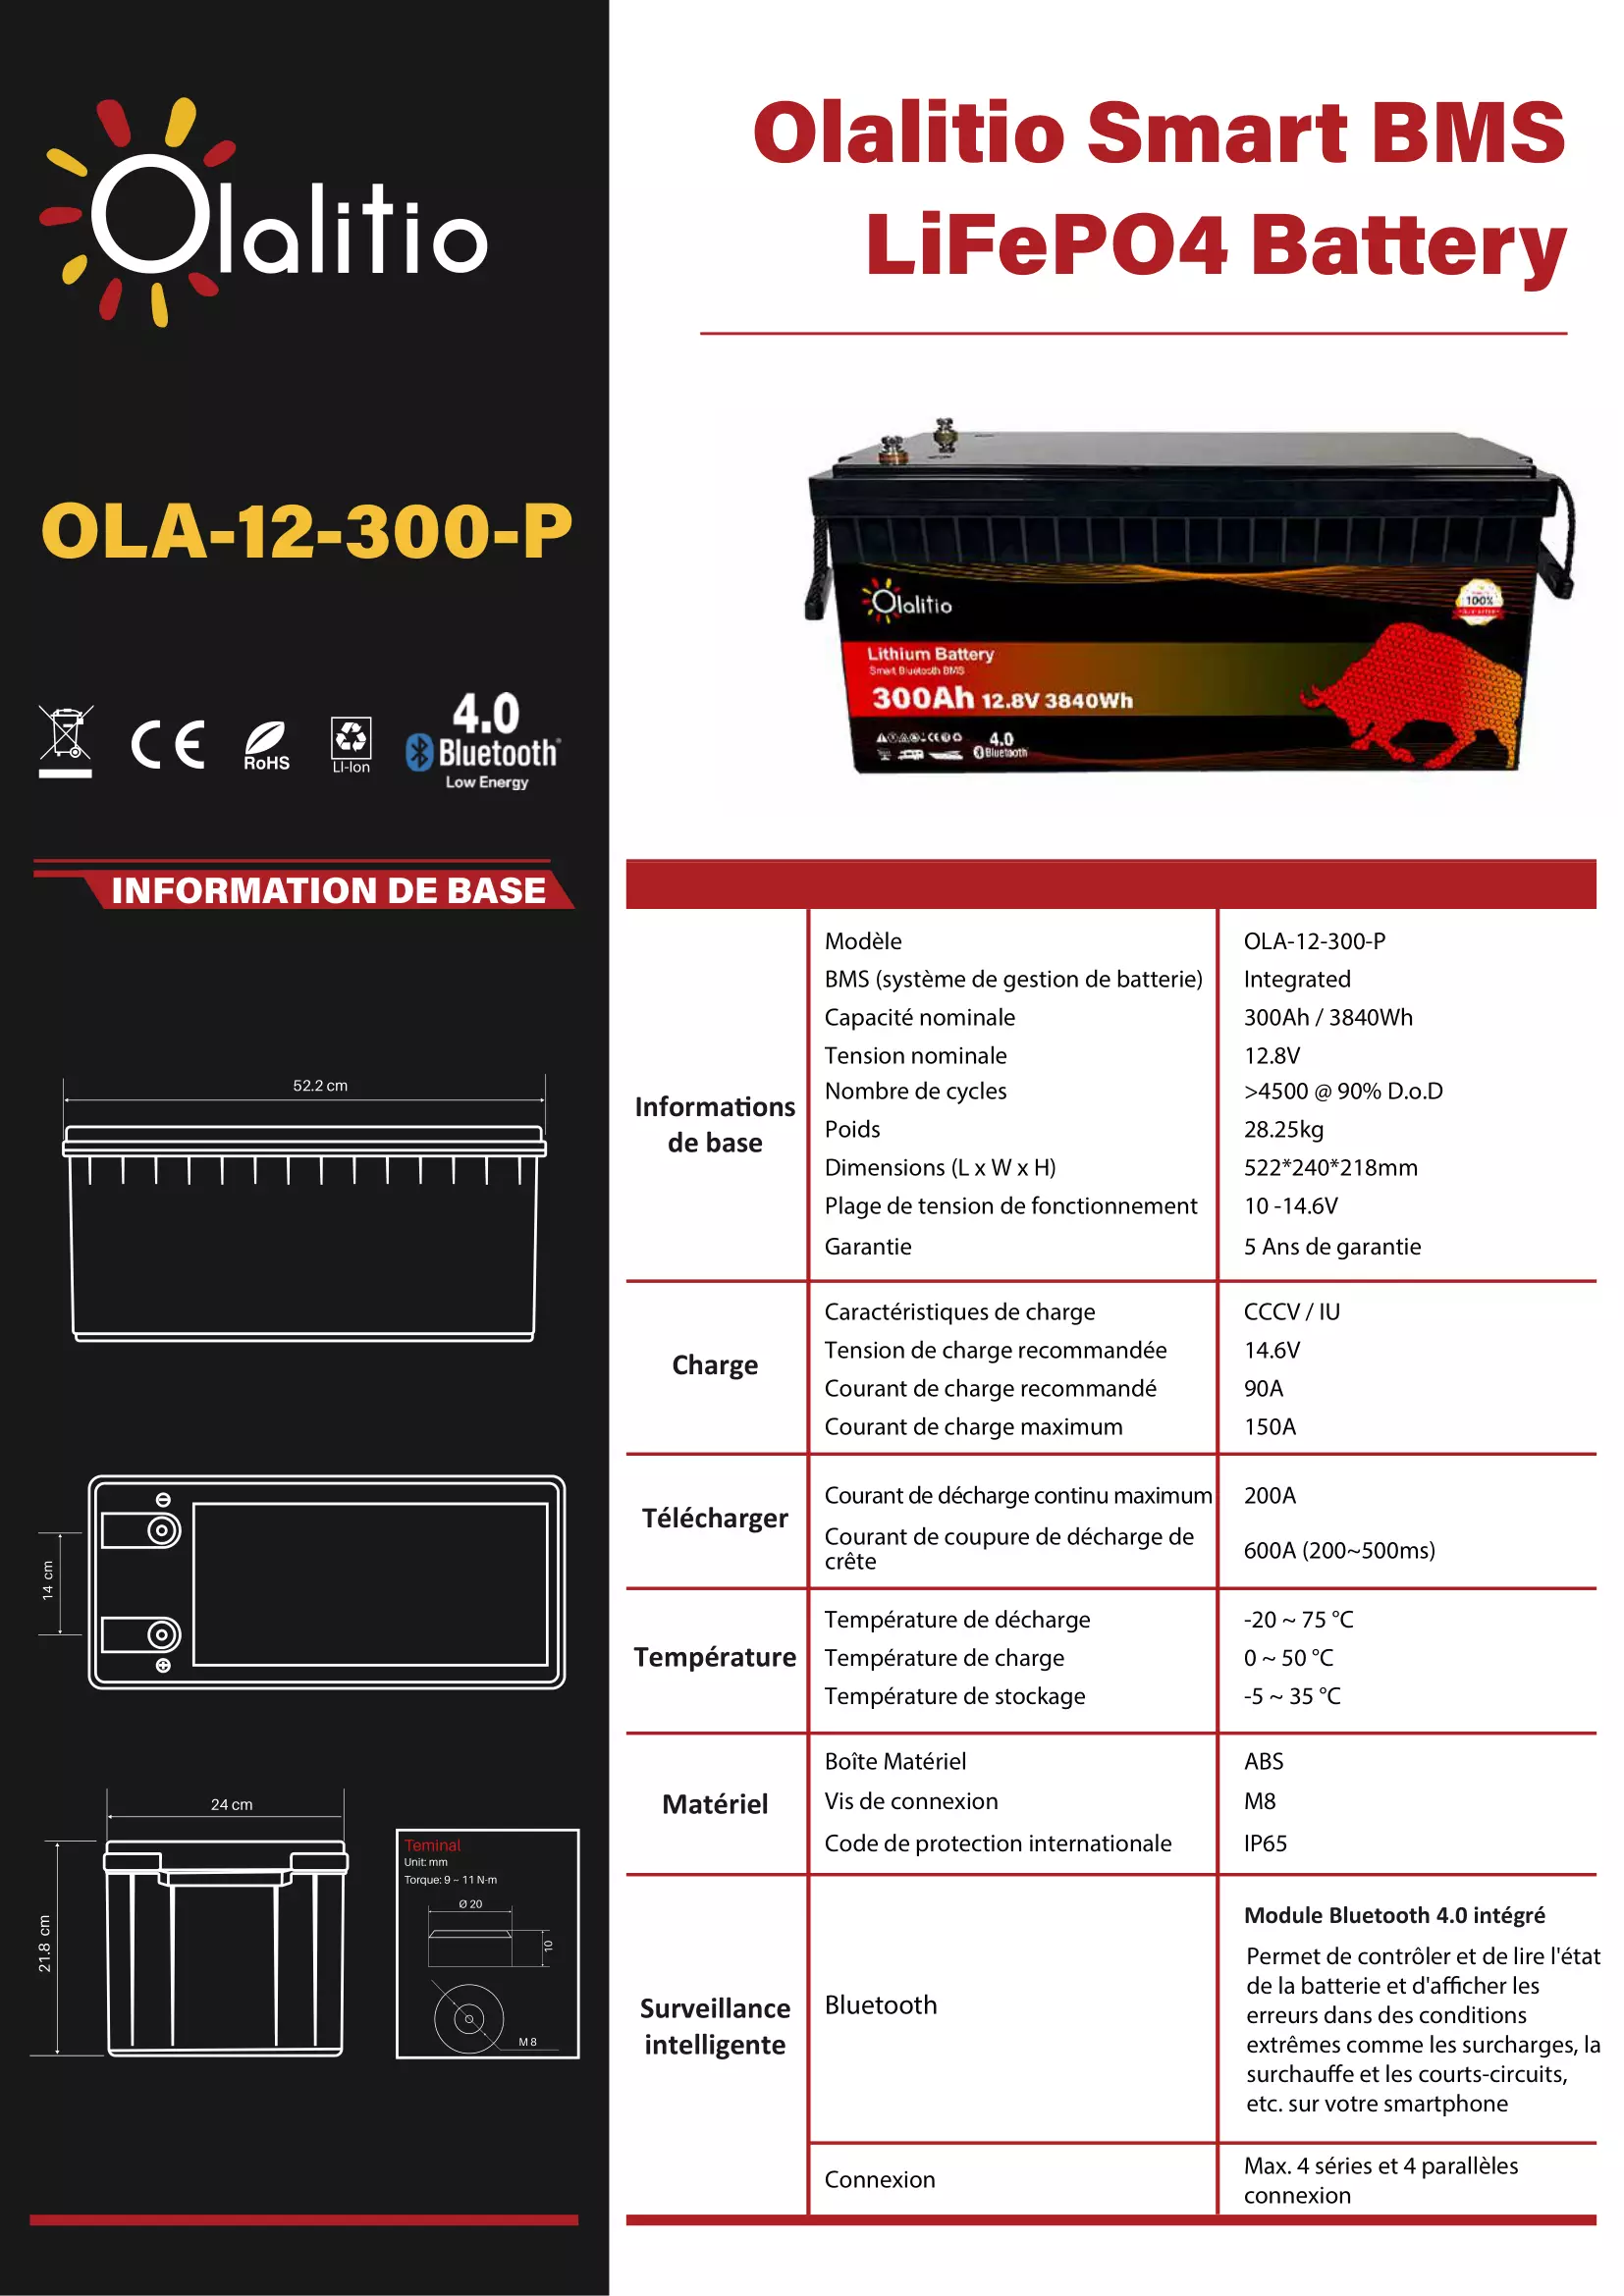 OLA-12-300-P-Fiche technique - Olalitio-Lihtium-Battery-12V300Ah-PRO-FR-1